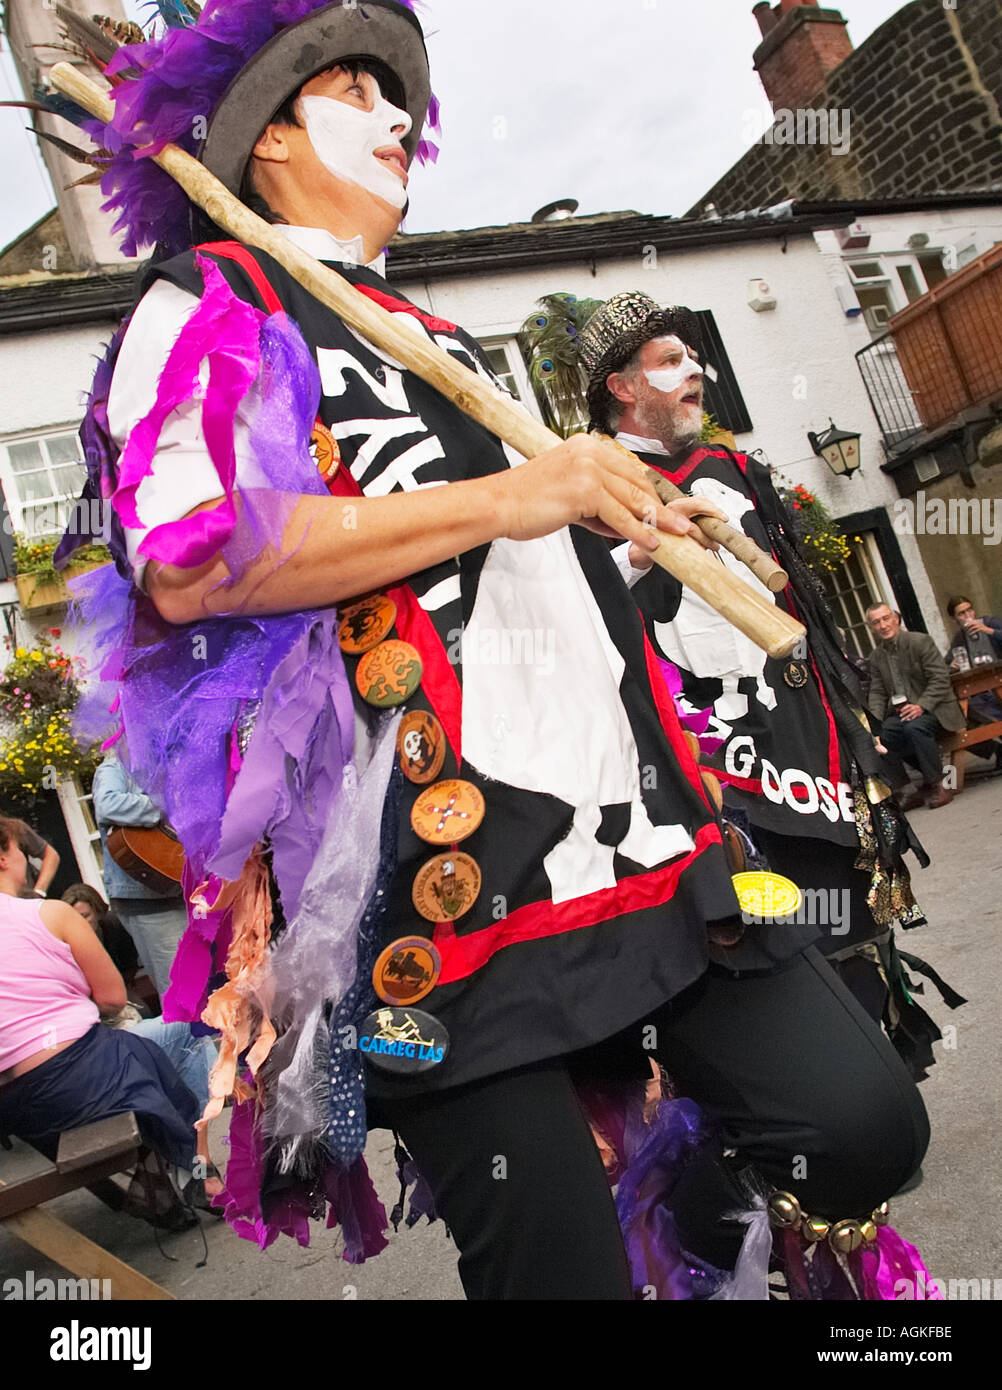 Wayzgoose femme Morris dancer dancing un Folk Festival, Yorkshire, Angleterre, Royaume-Uni Banque D'Images